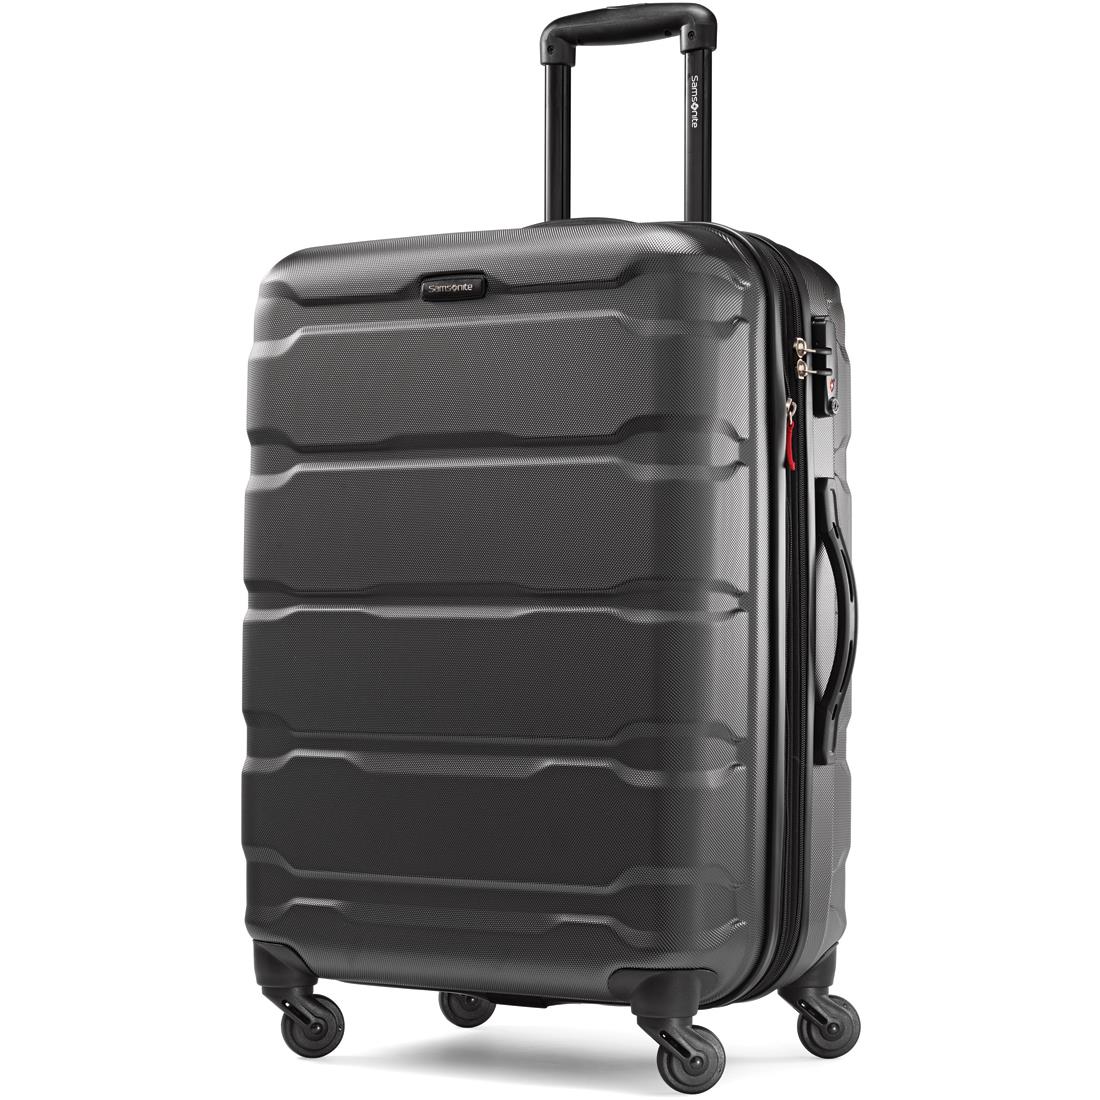 Samsonite Omni 24 Inch Hardside Spinner Luggage Suitcase Black (68309-1041)